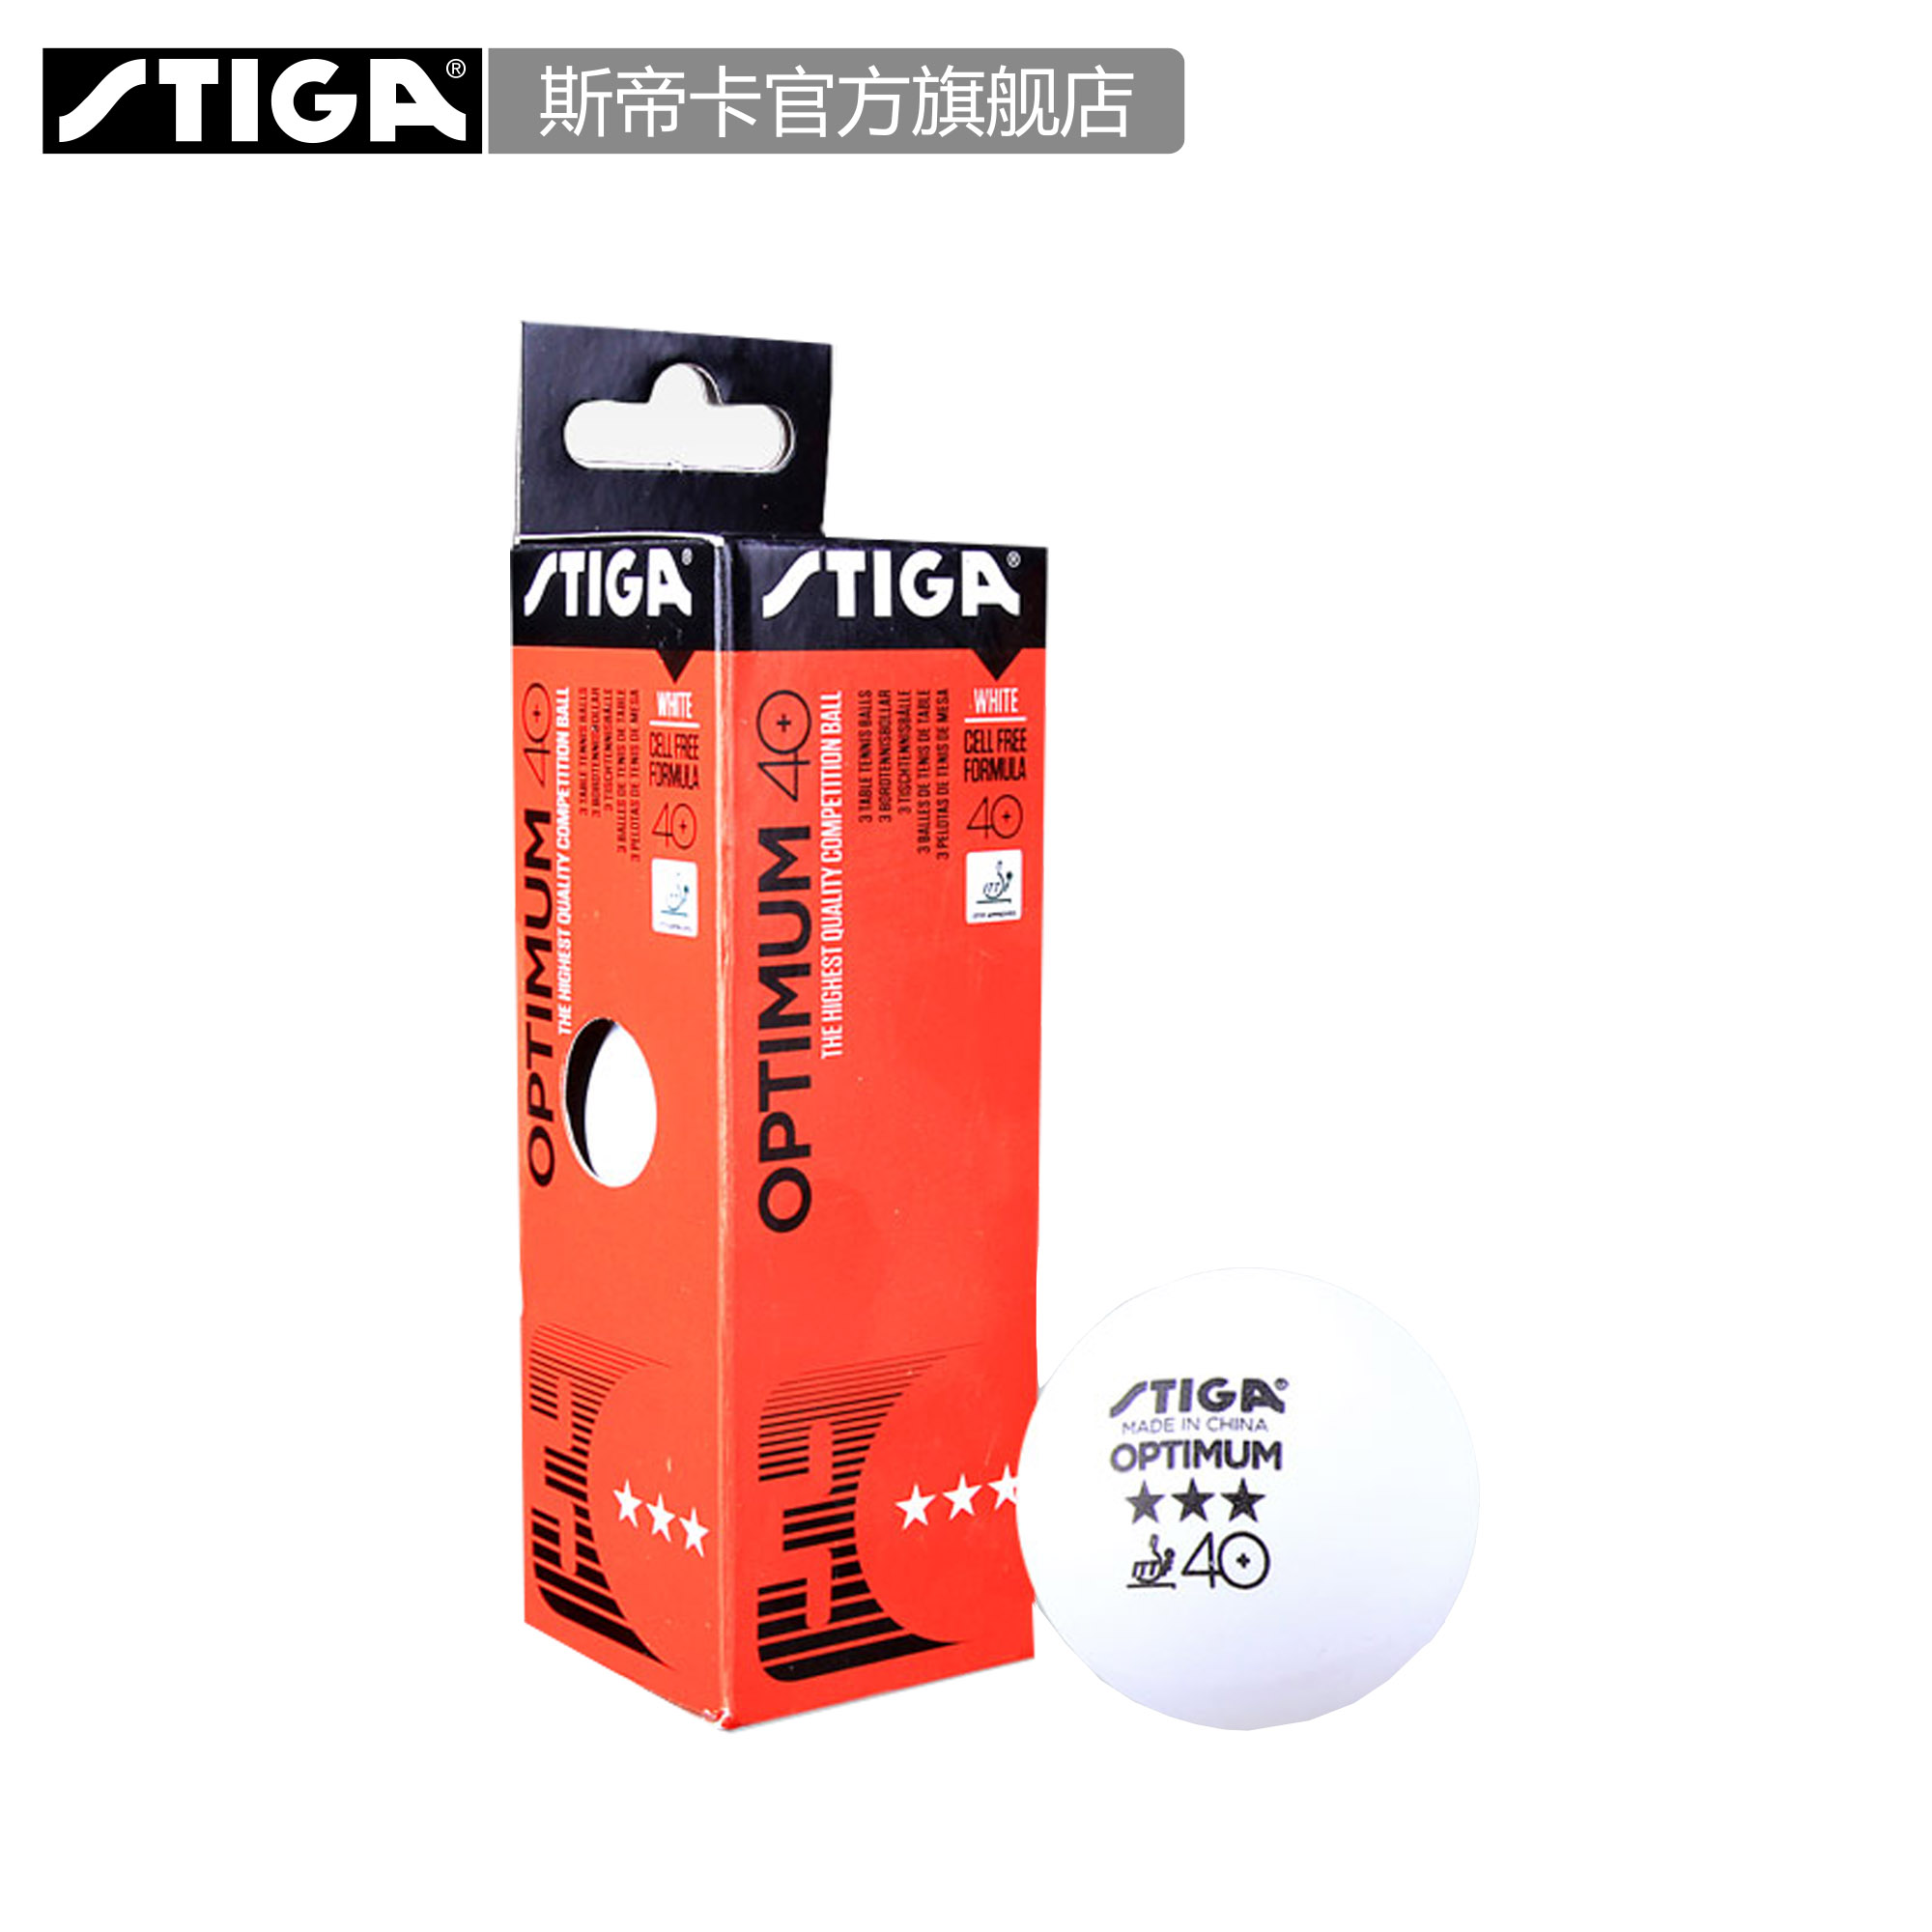 『STIGA官方旗舰店』斯帝卡三星国际比赛用球 OPTIMUM 40+乒乓球